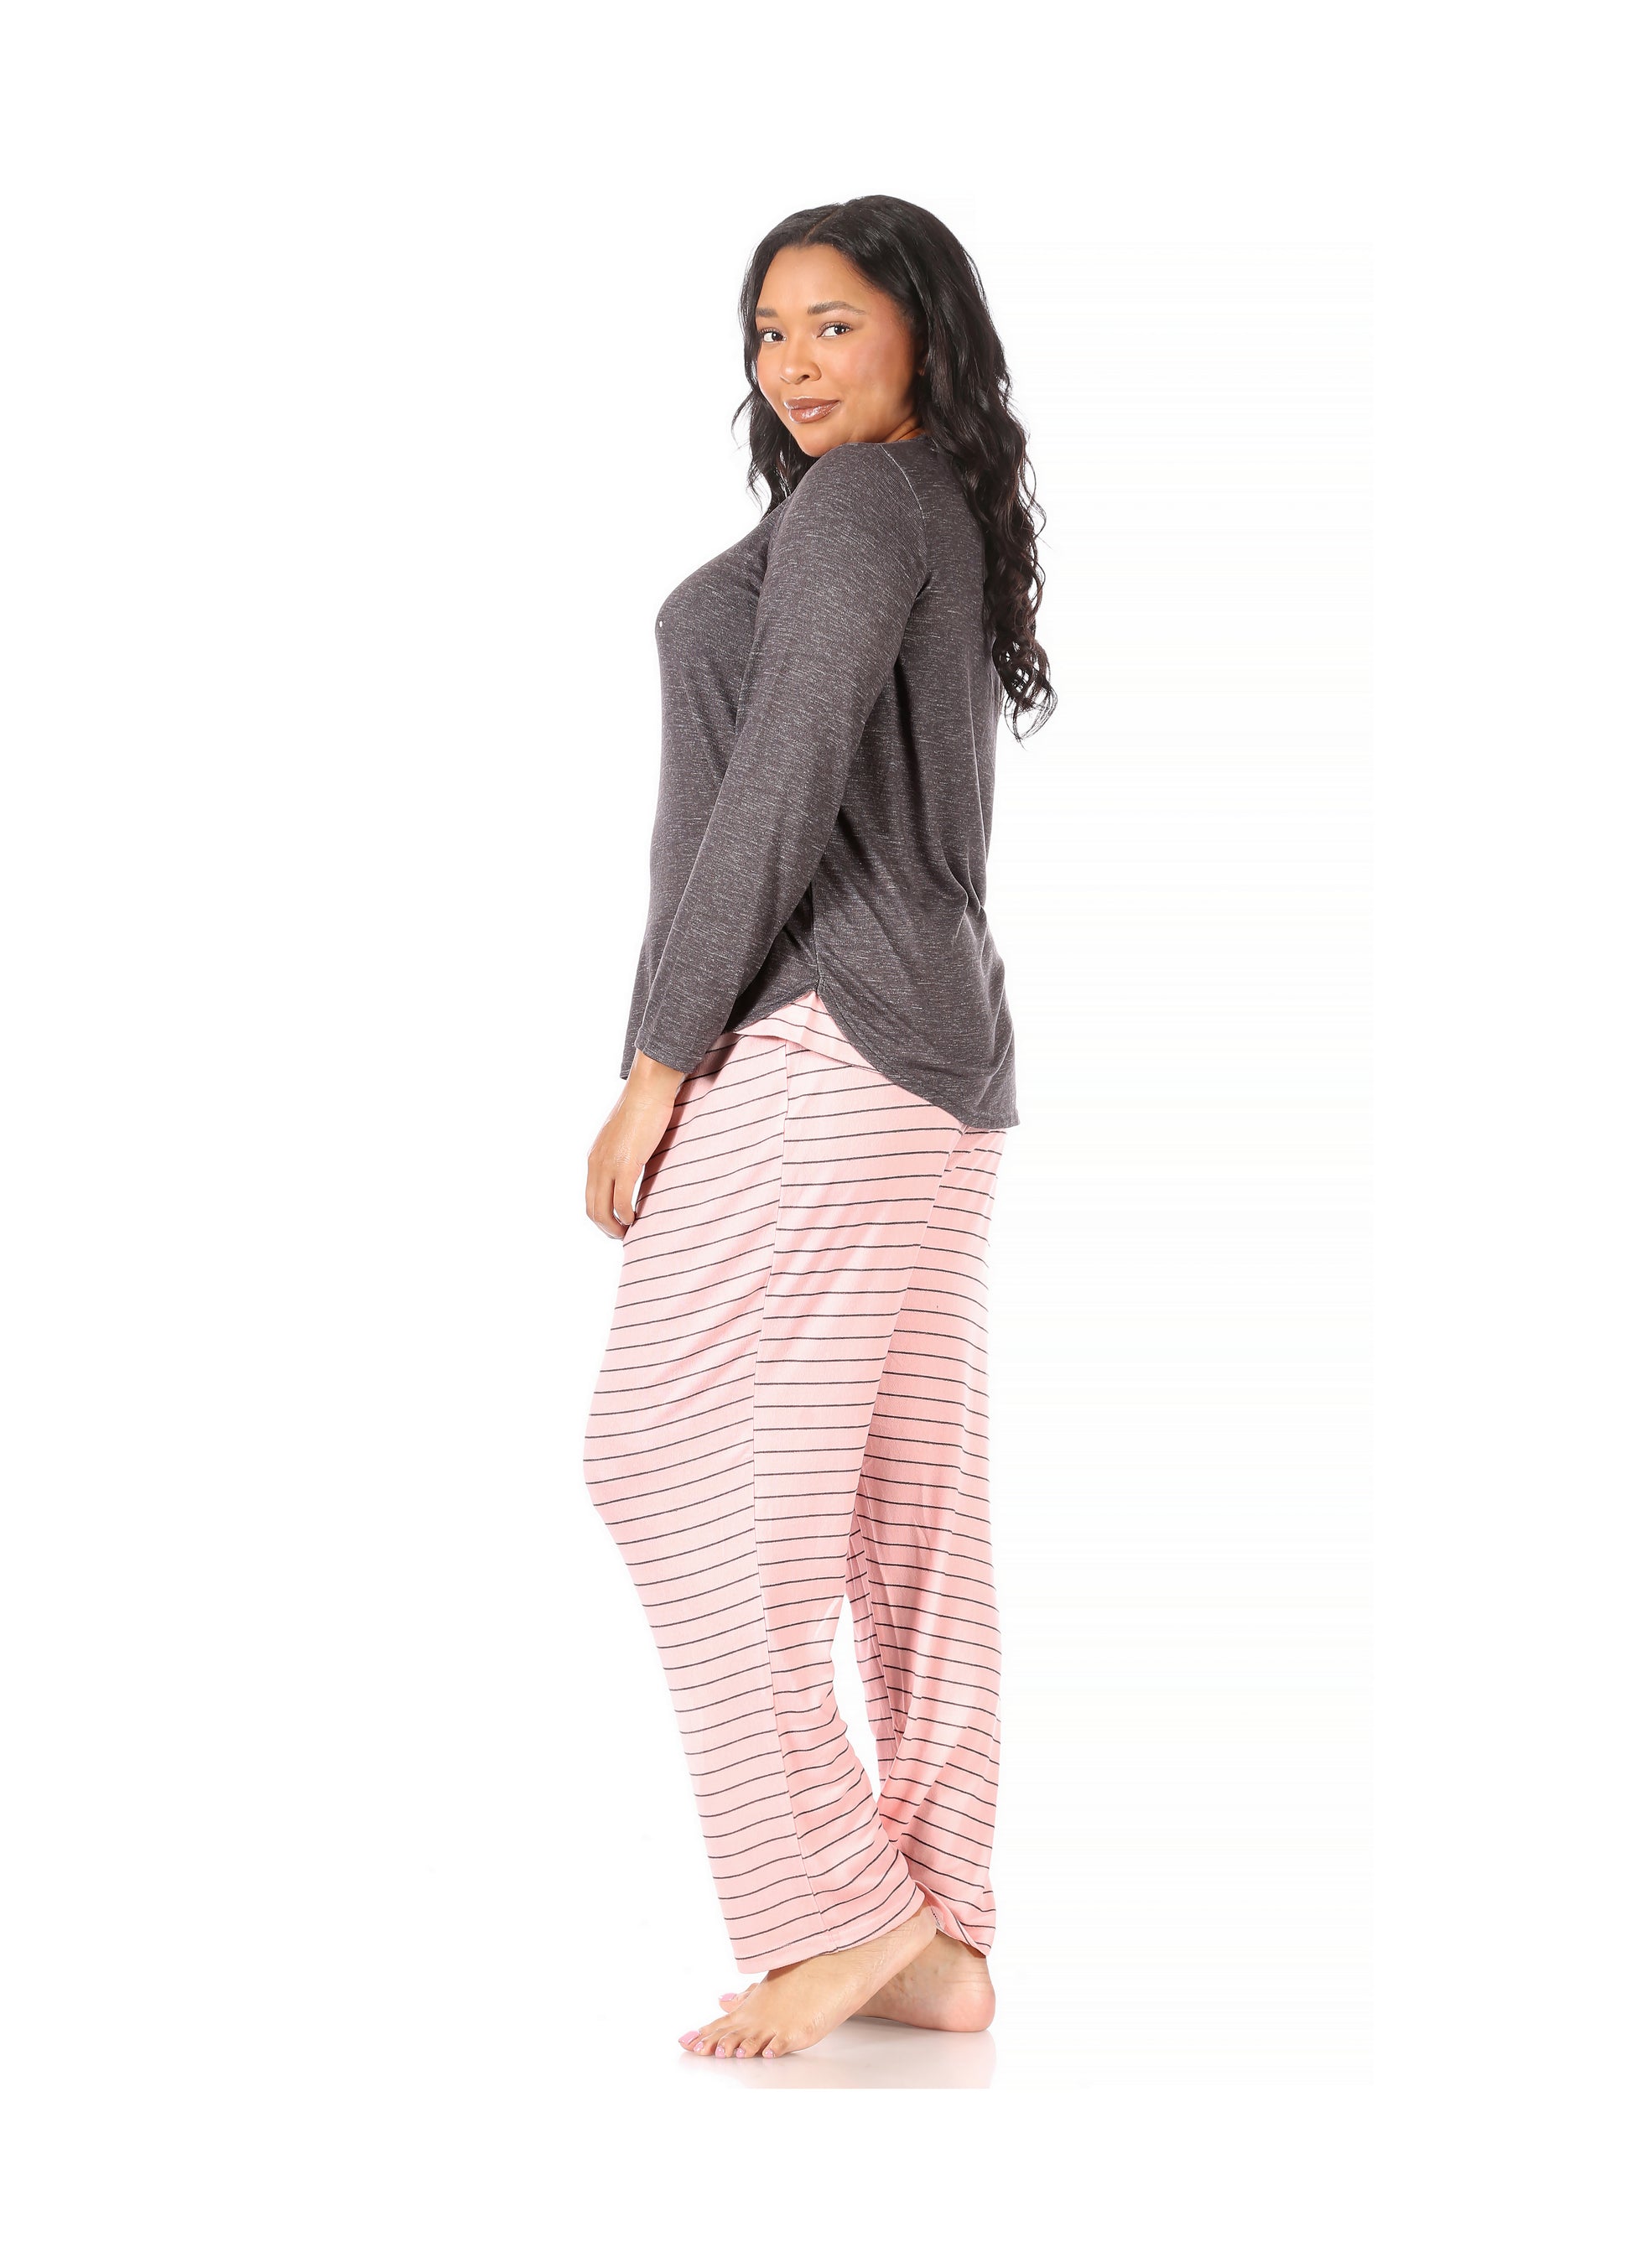 Women's Plus Size Short Sleeve Top And Pants Pajama Set Pink 1x